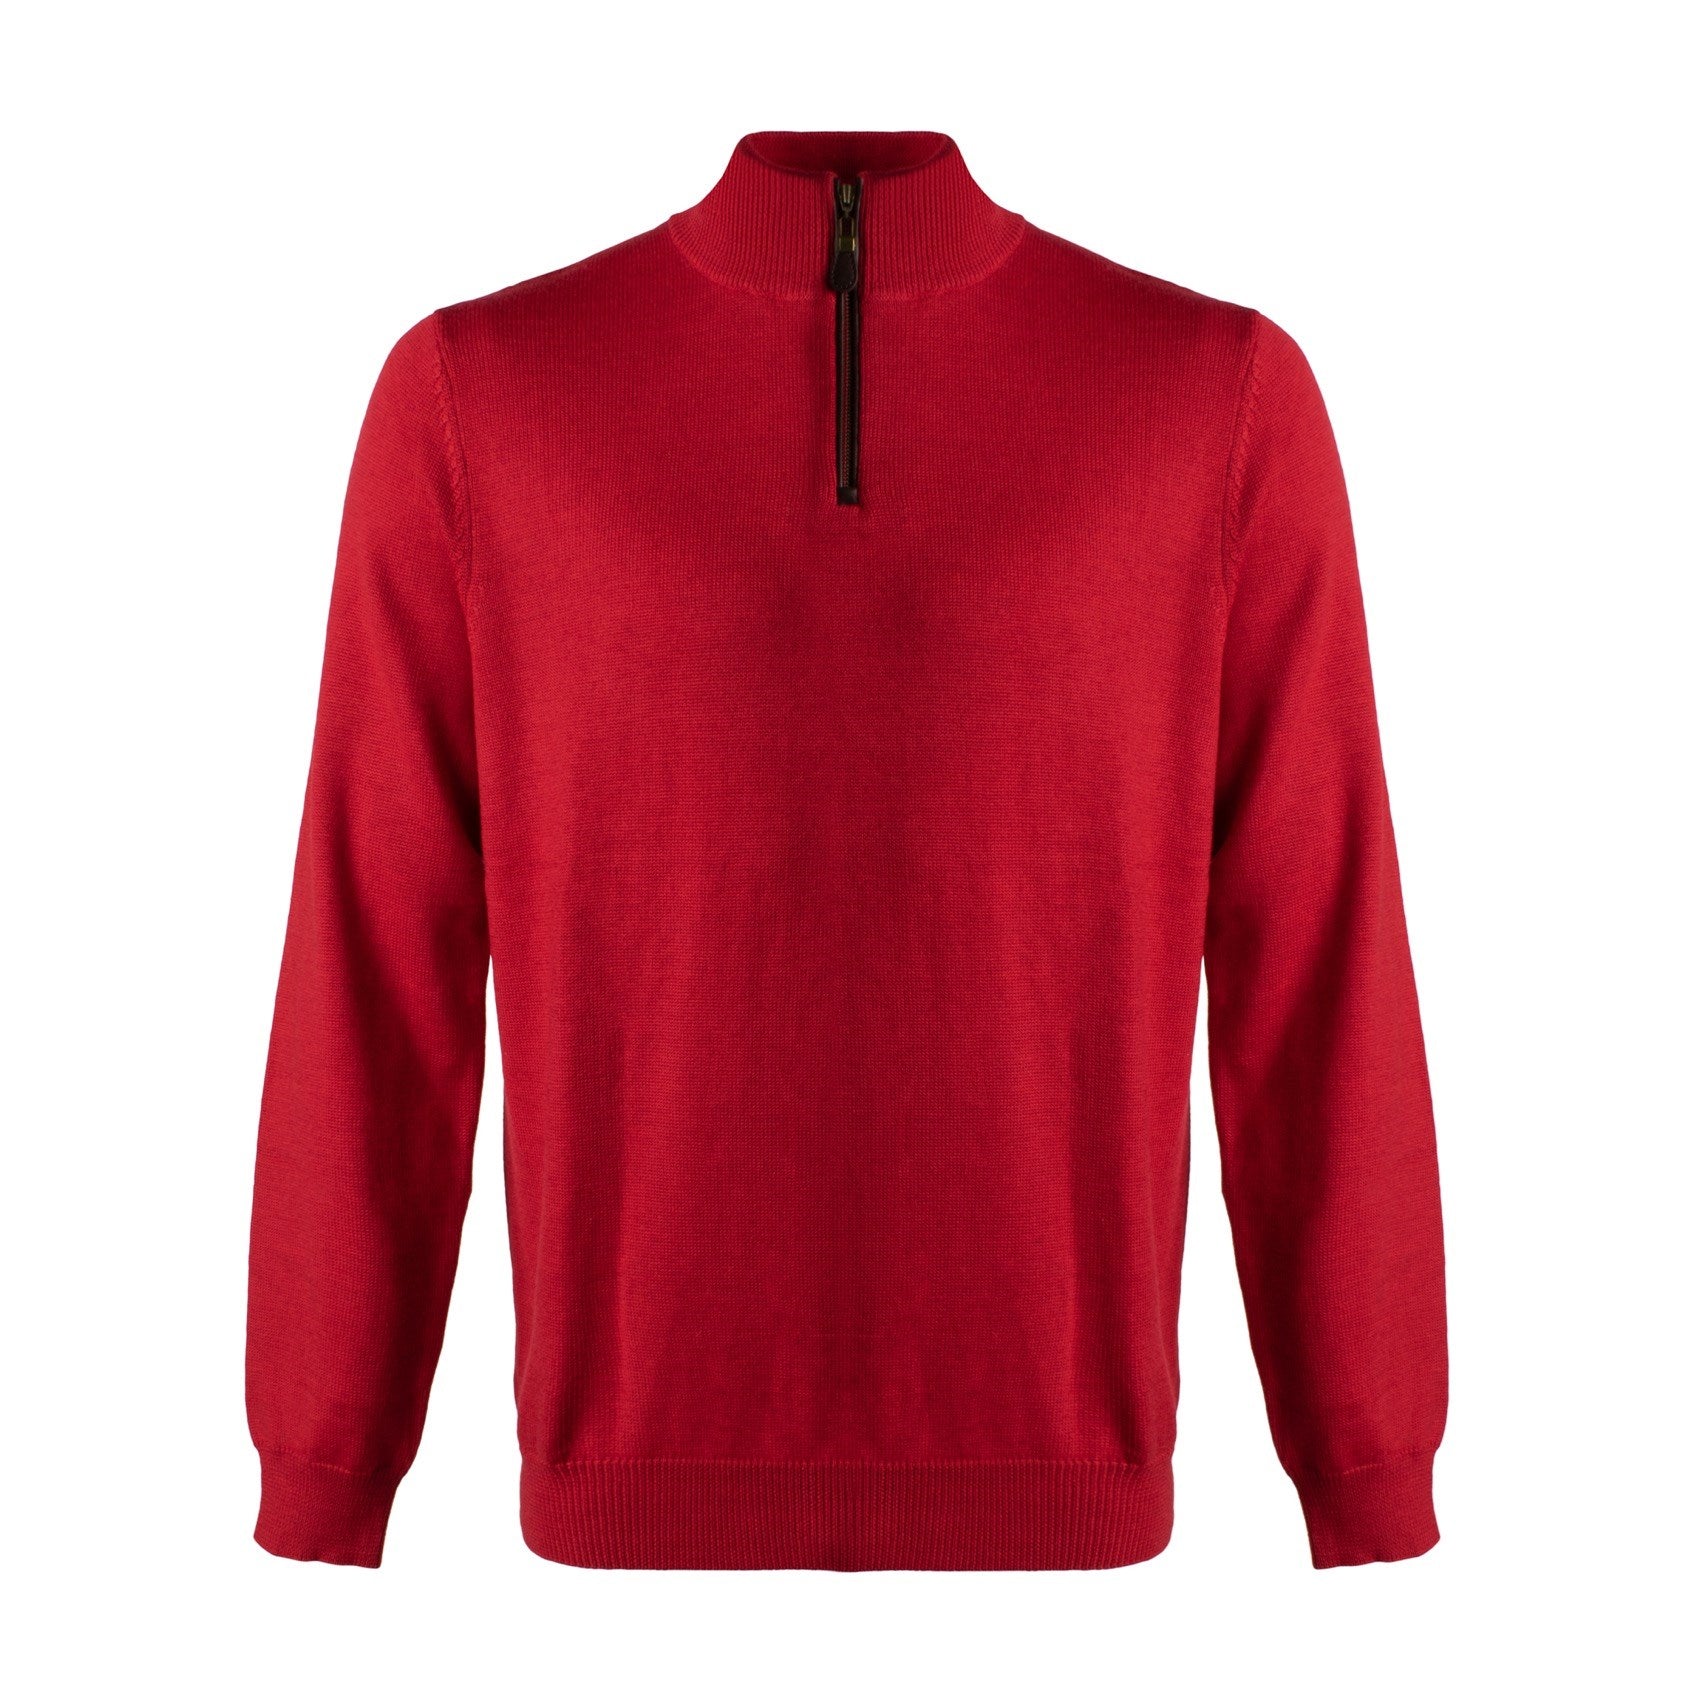 Extra Fine 'Zegna Baruffa' Merino Wool Quarter-Zip Sweater in Admiral Red by Viyella